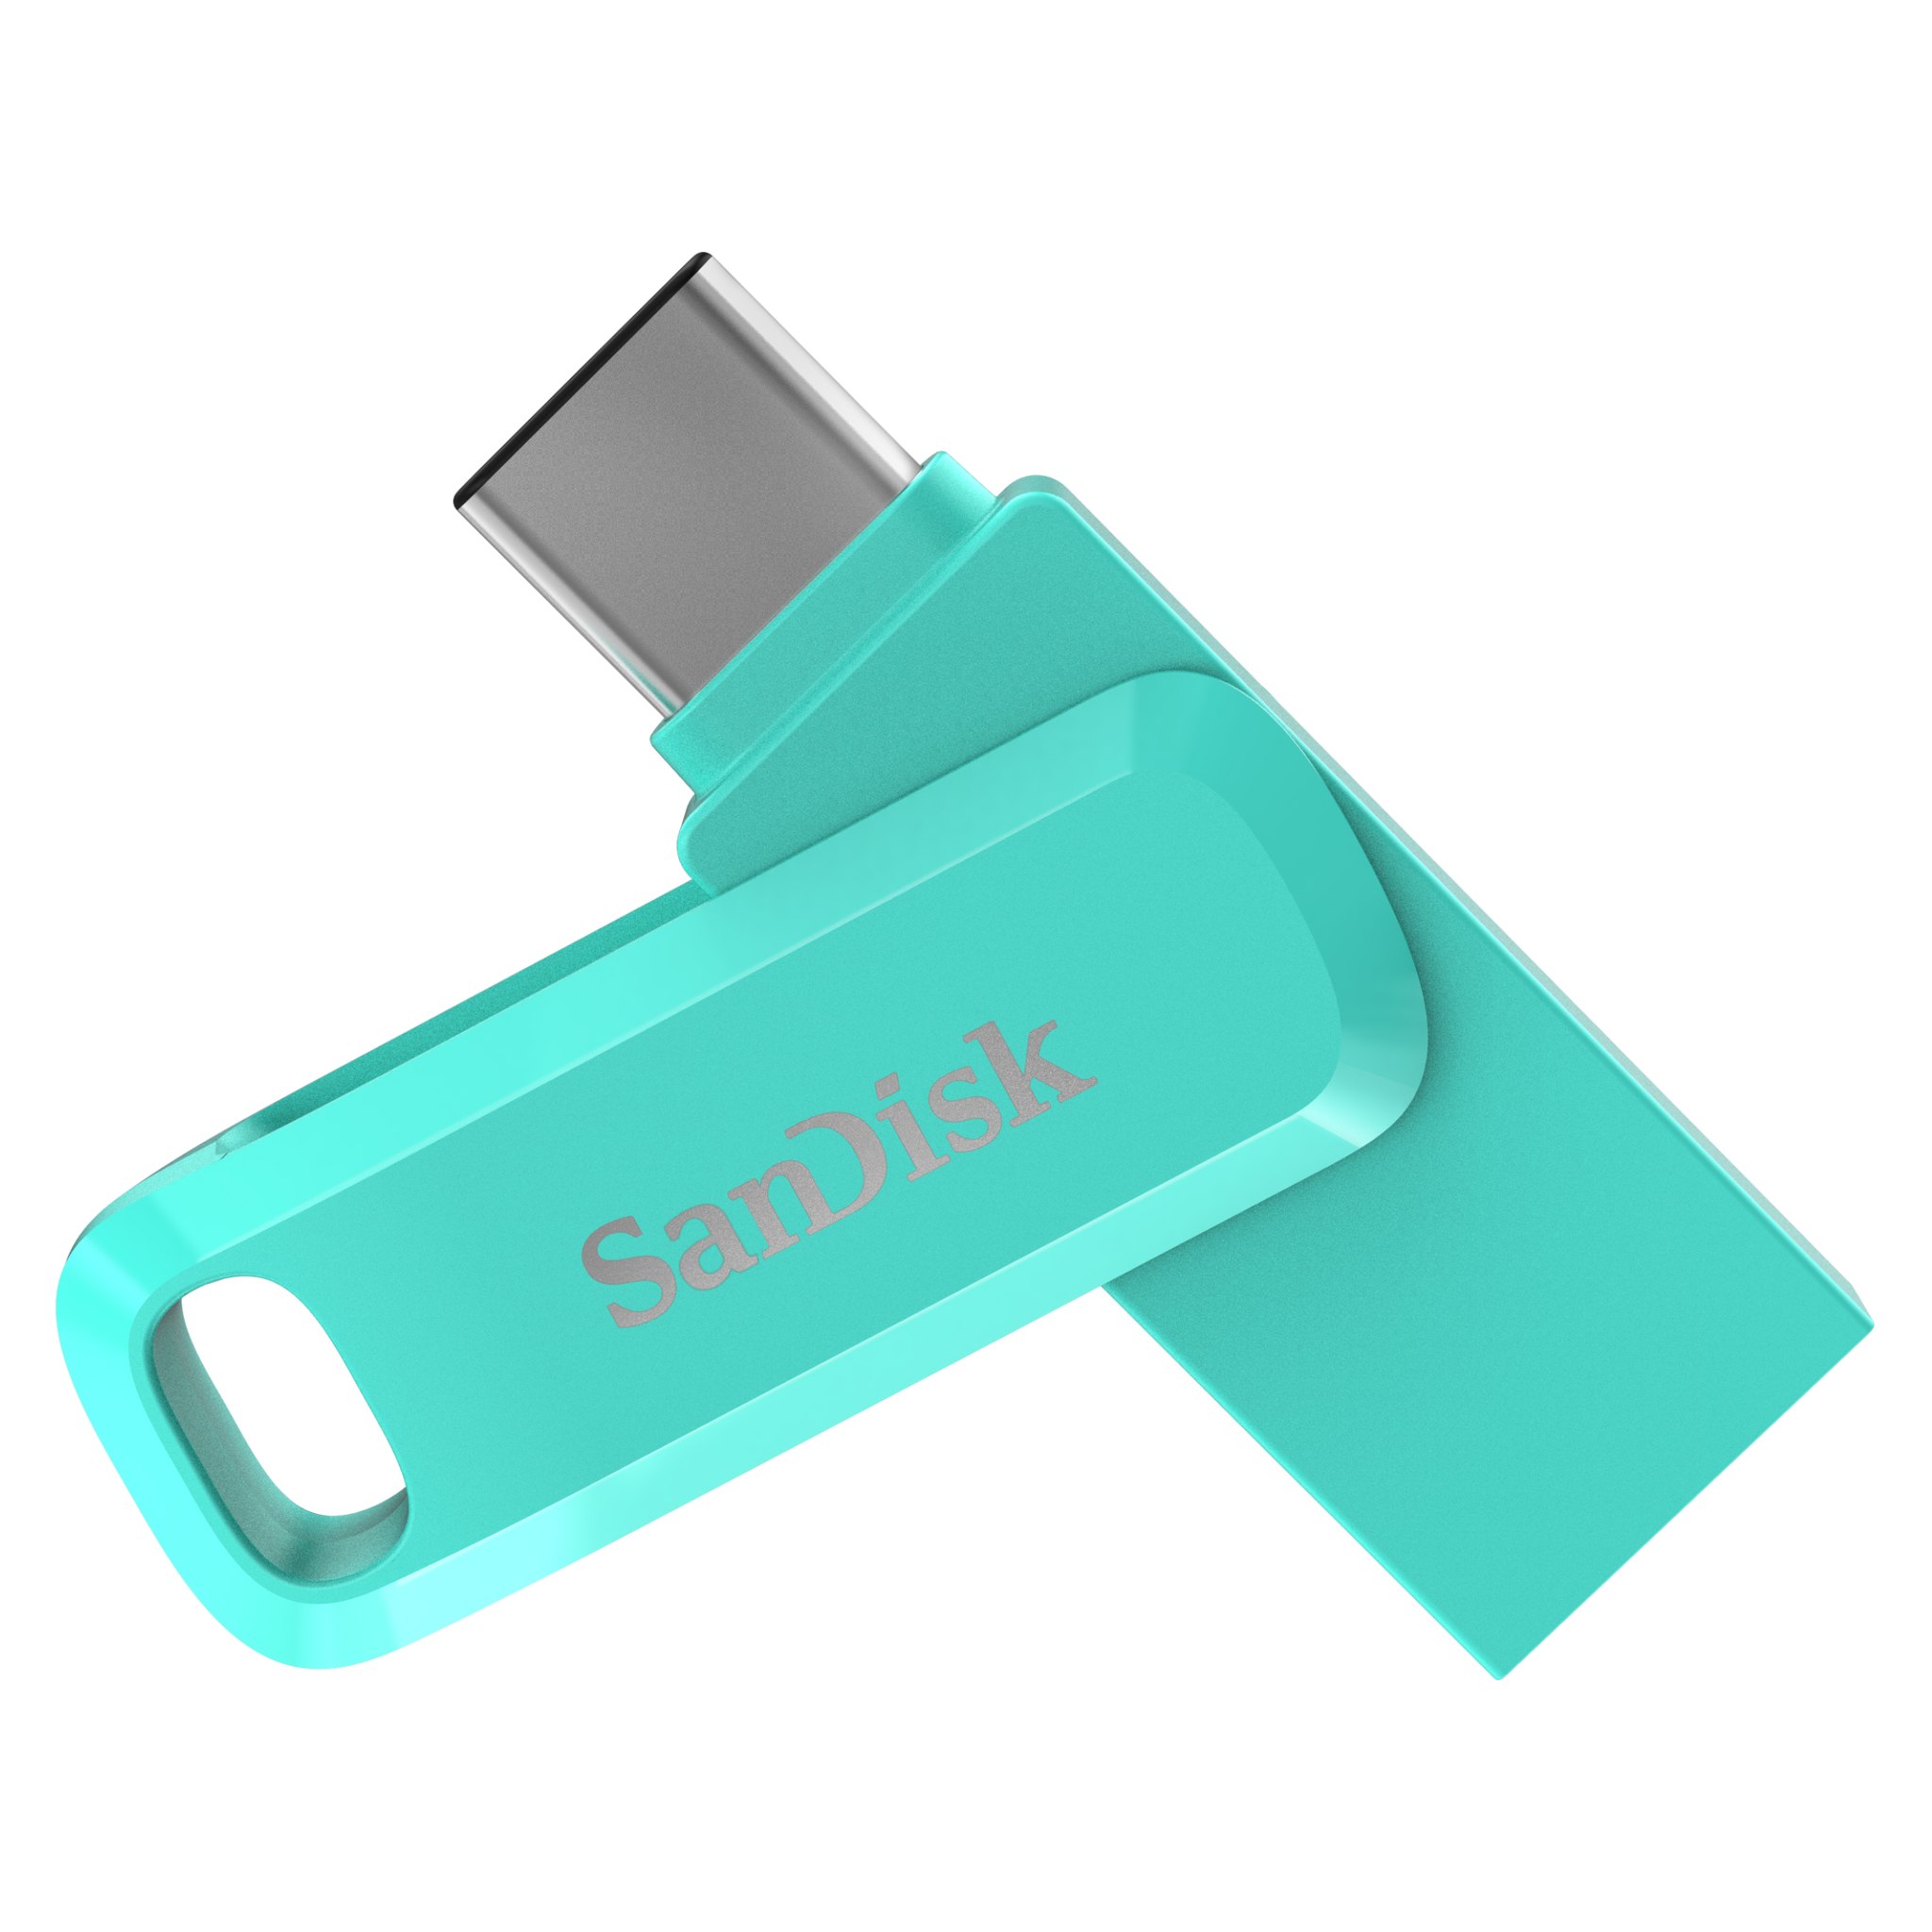 SanDisk Ultra Dual Drive Go USB Type-C - 32GB